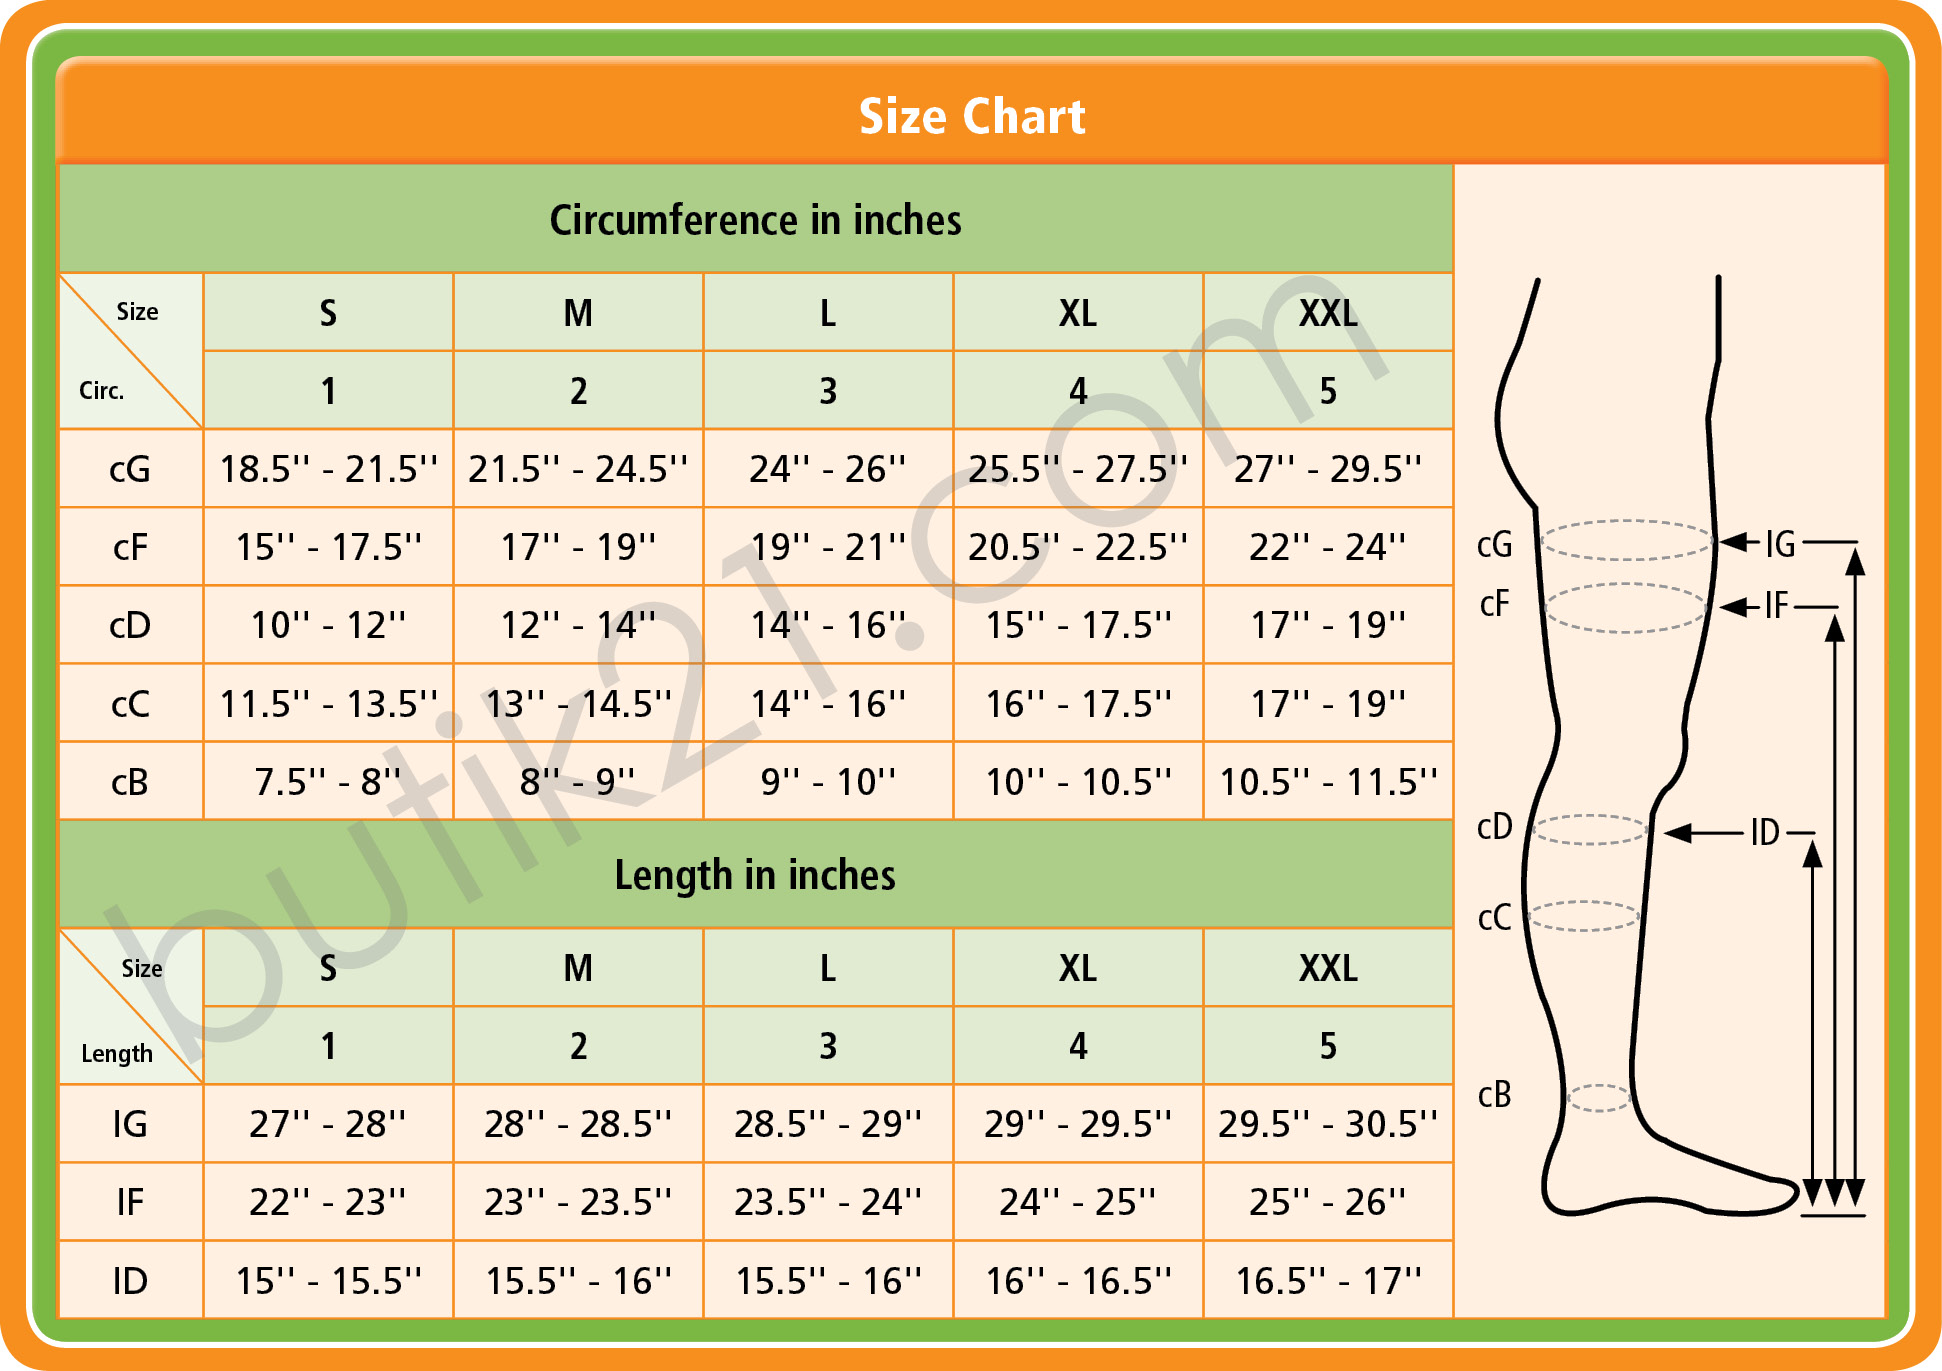 Fotgrossisten - Size chart Leggings with Compression (Compression leggings)